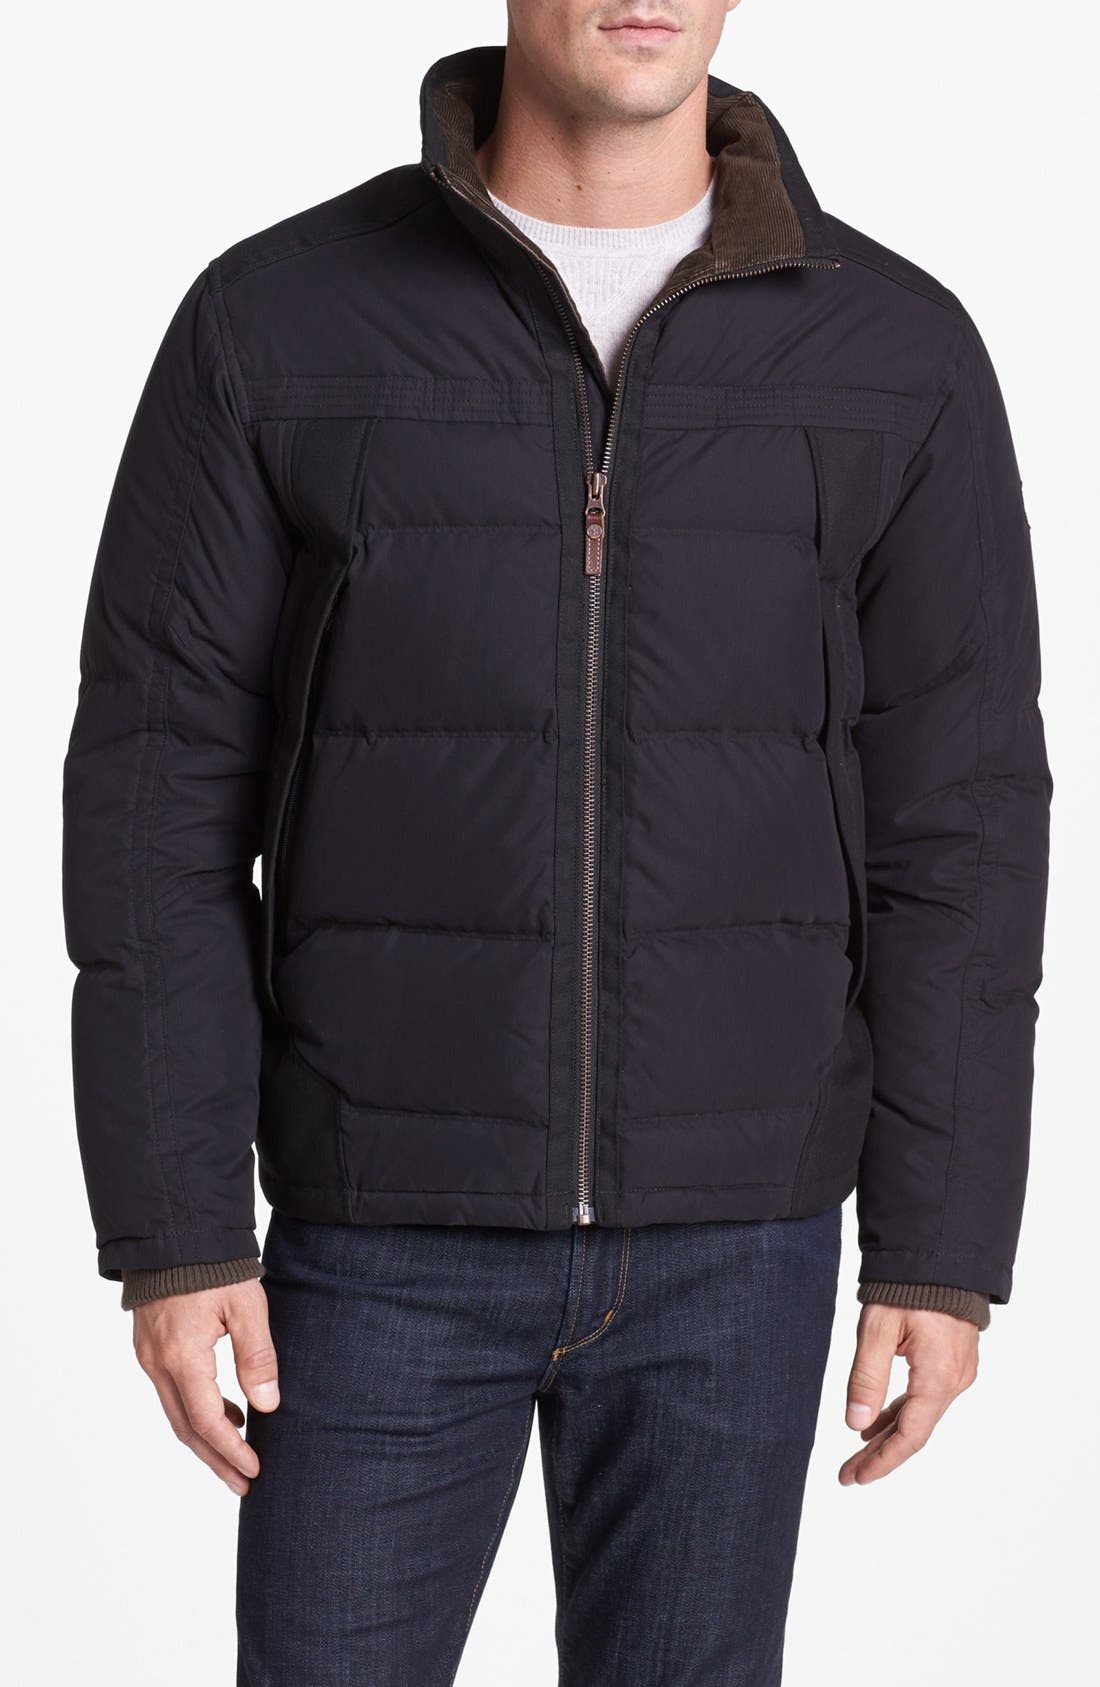 timberland junior puffer jacket